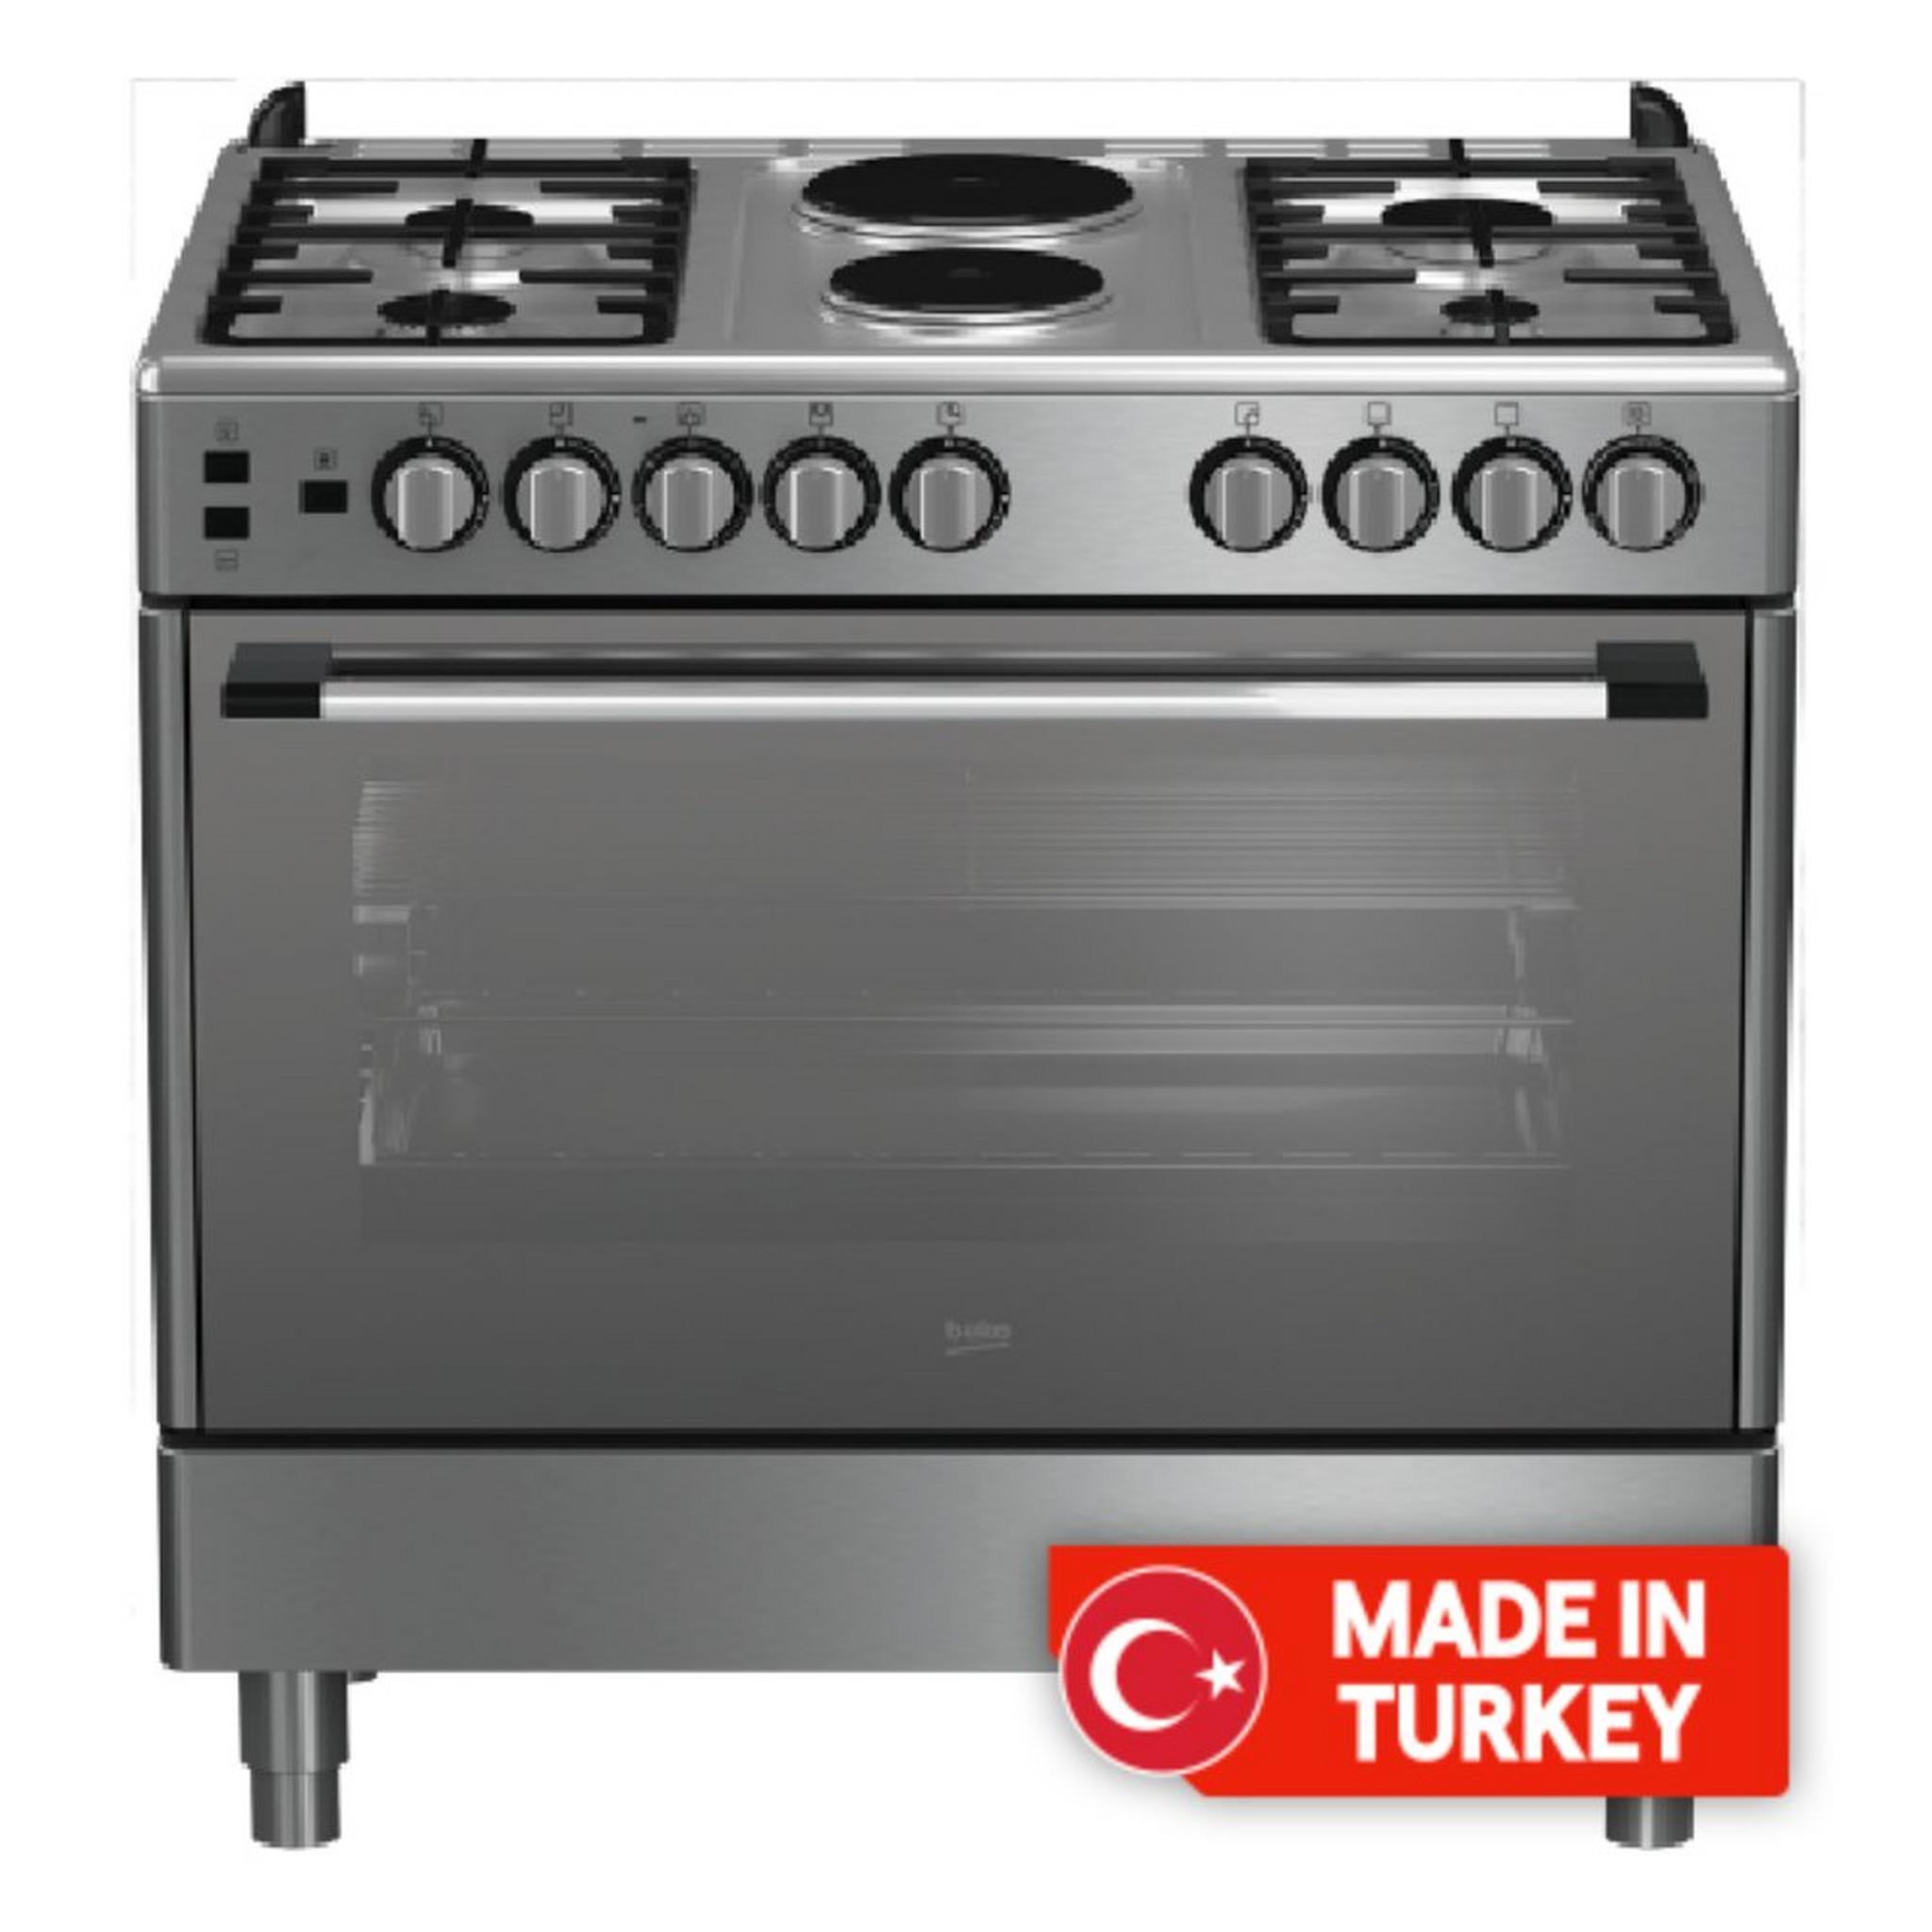 Beko 90X60cm Cooking range 2 Hotplate 4 Gas Burners (GG 12120 FX) - Stainless Steel